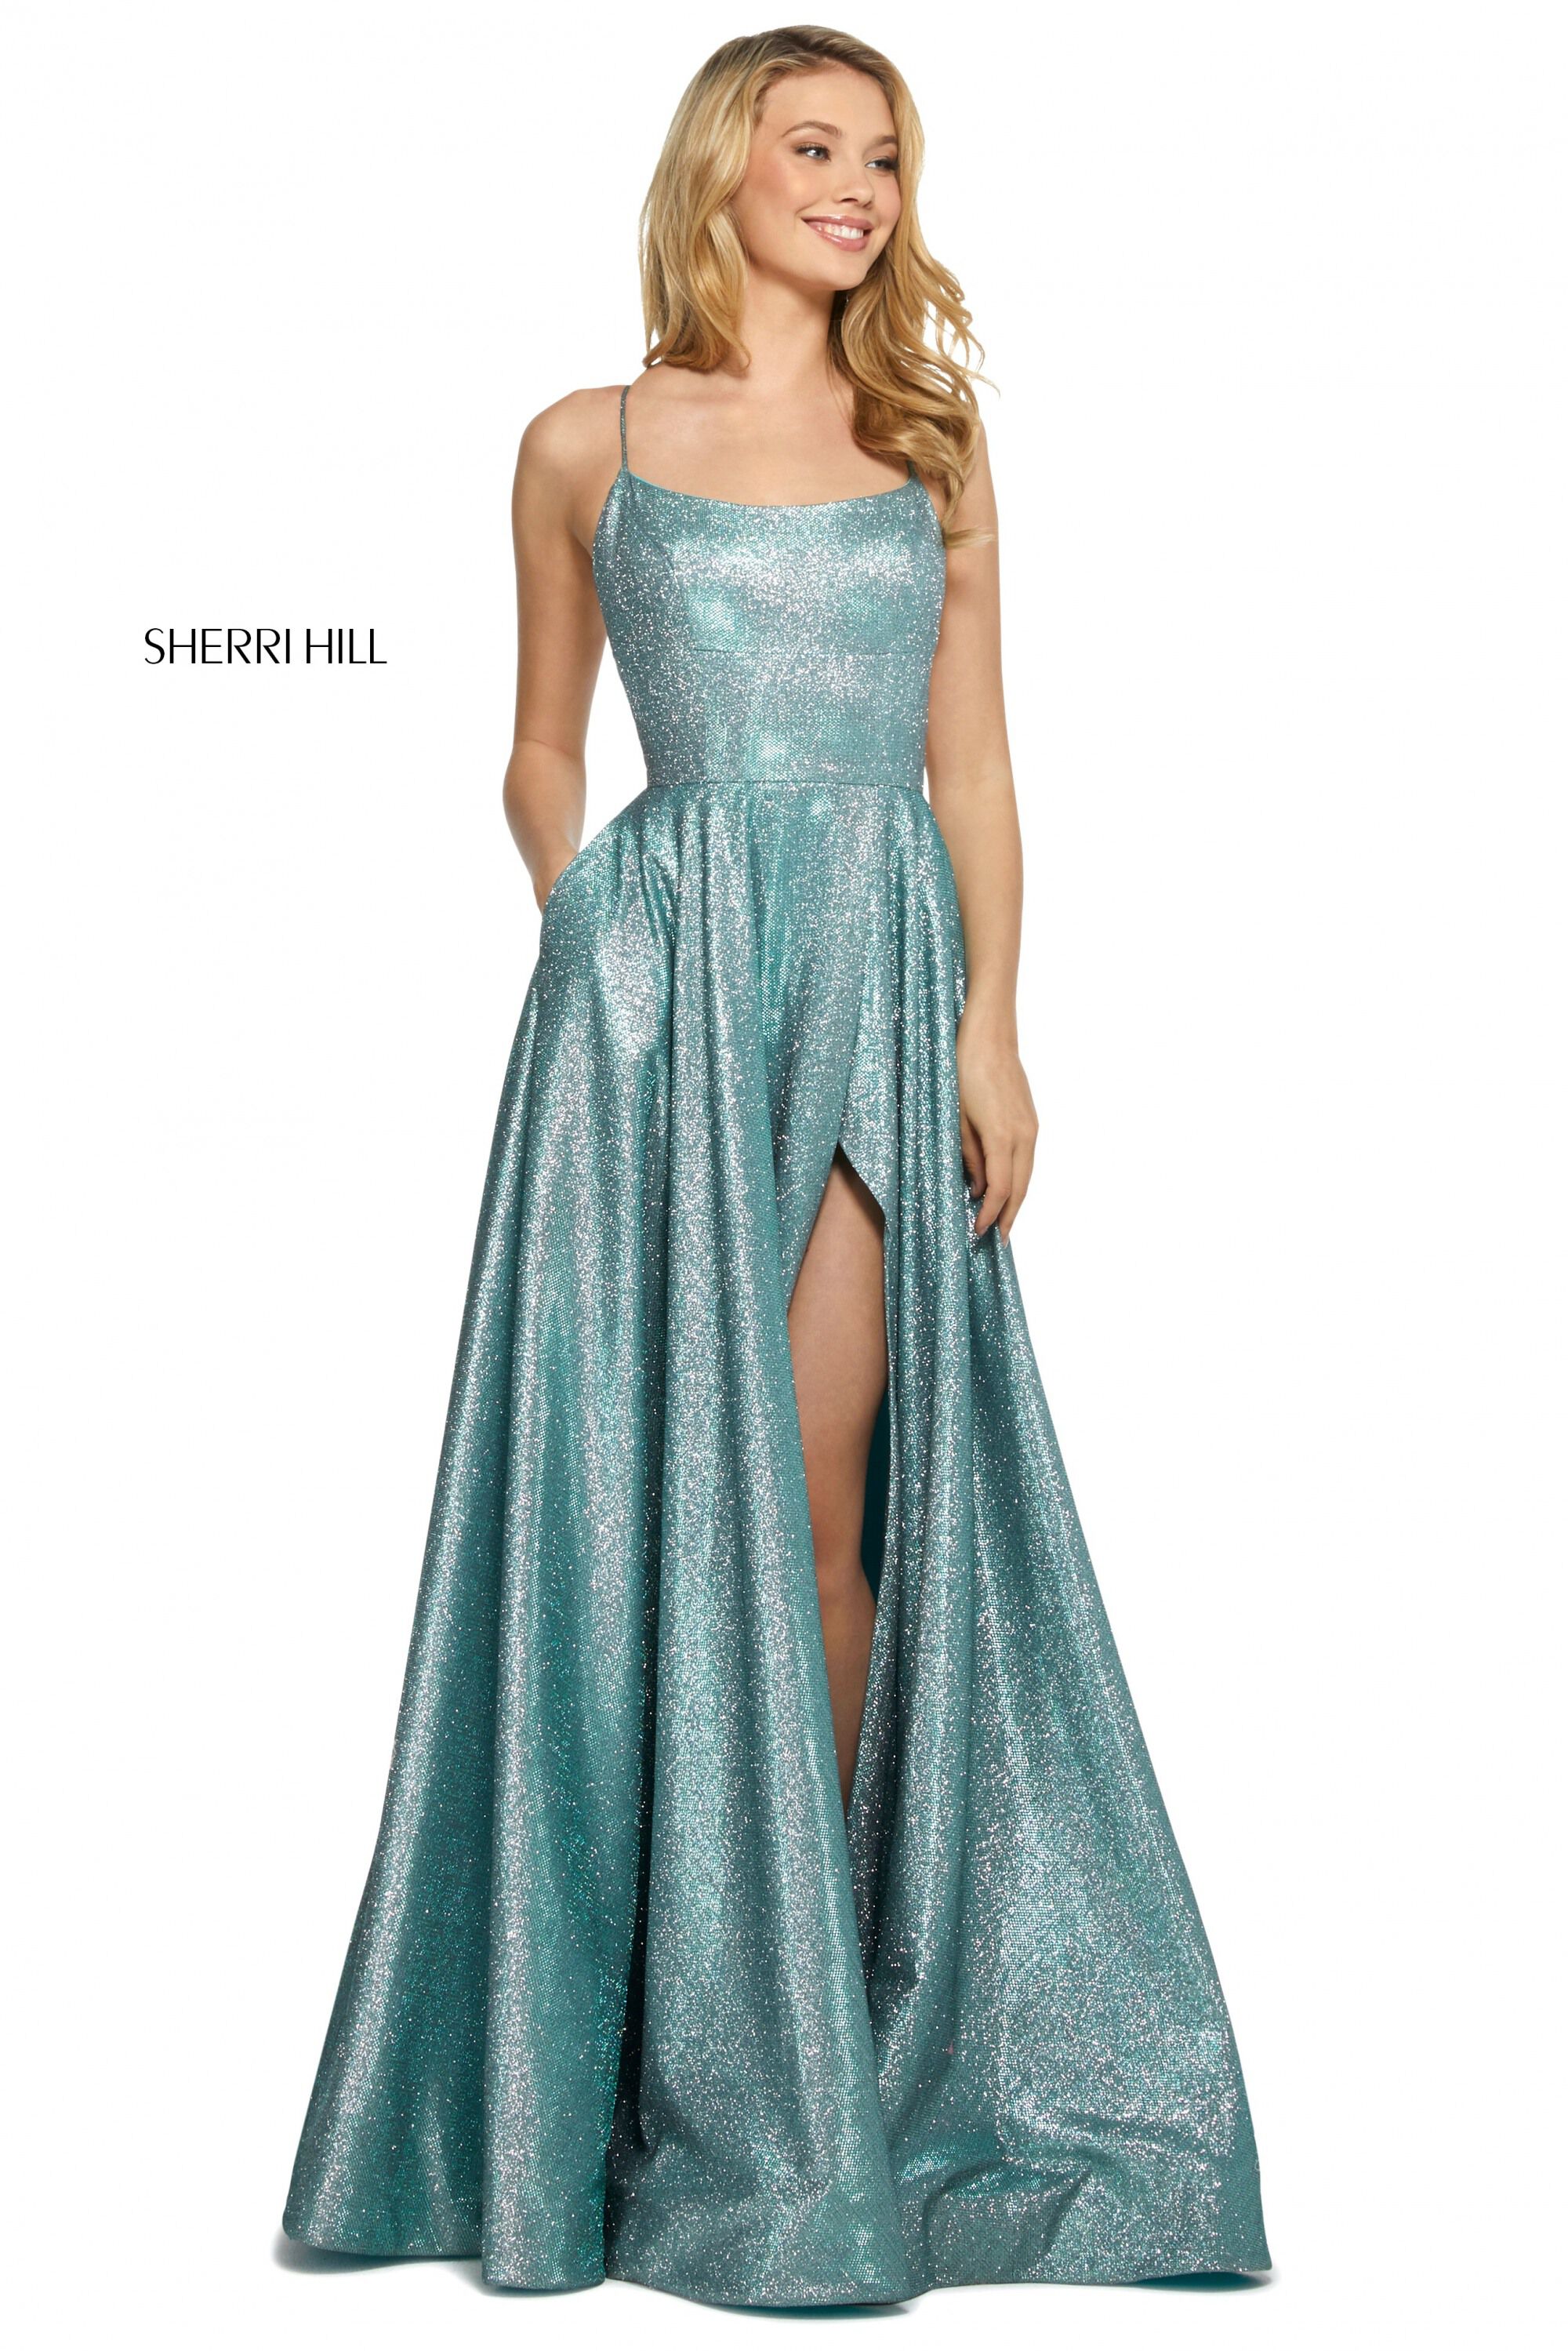 sherri hill glitter dress